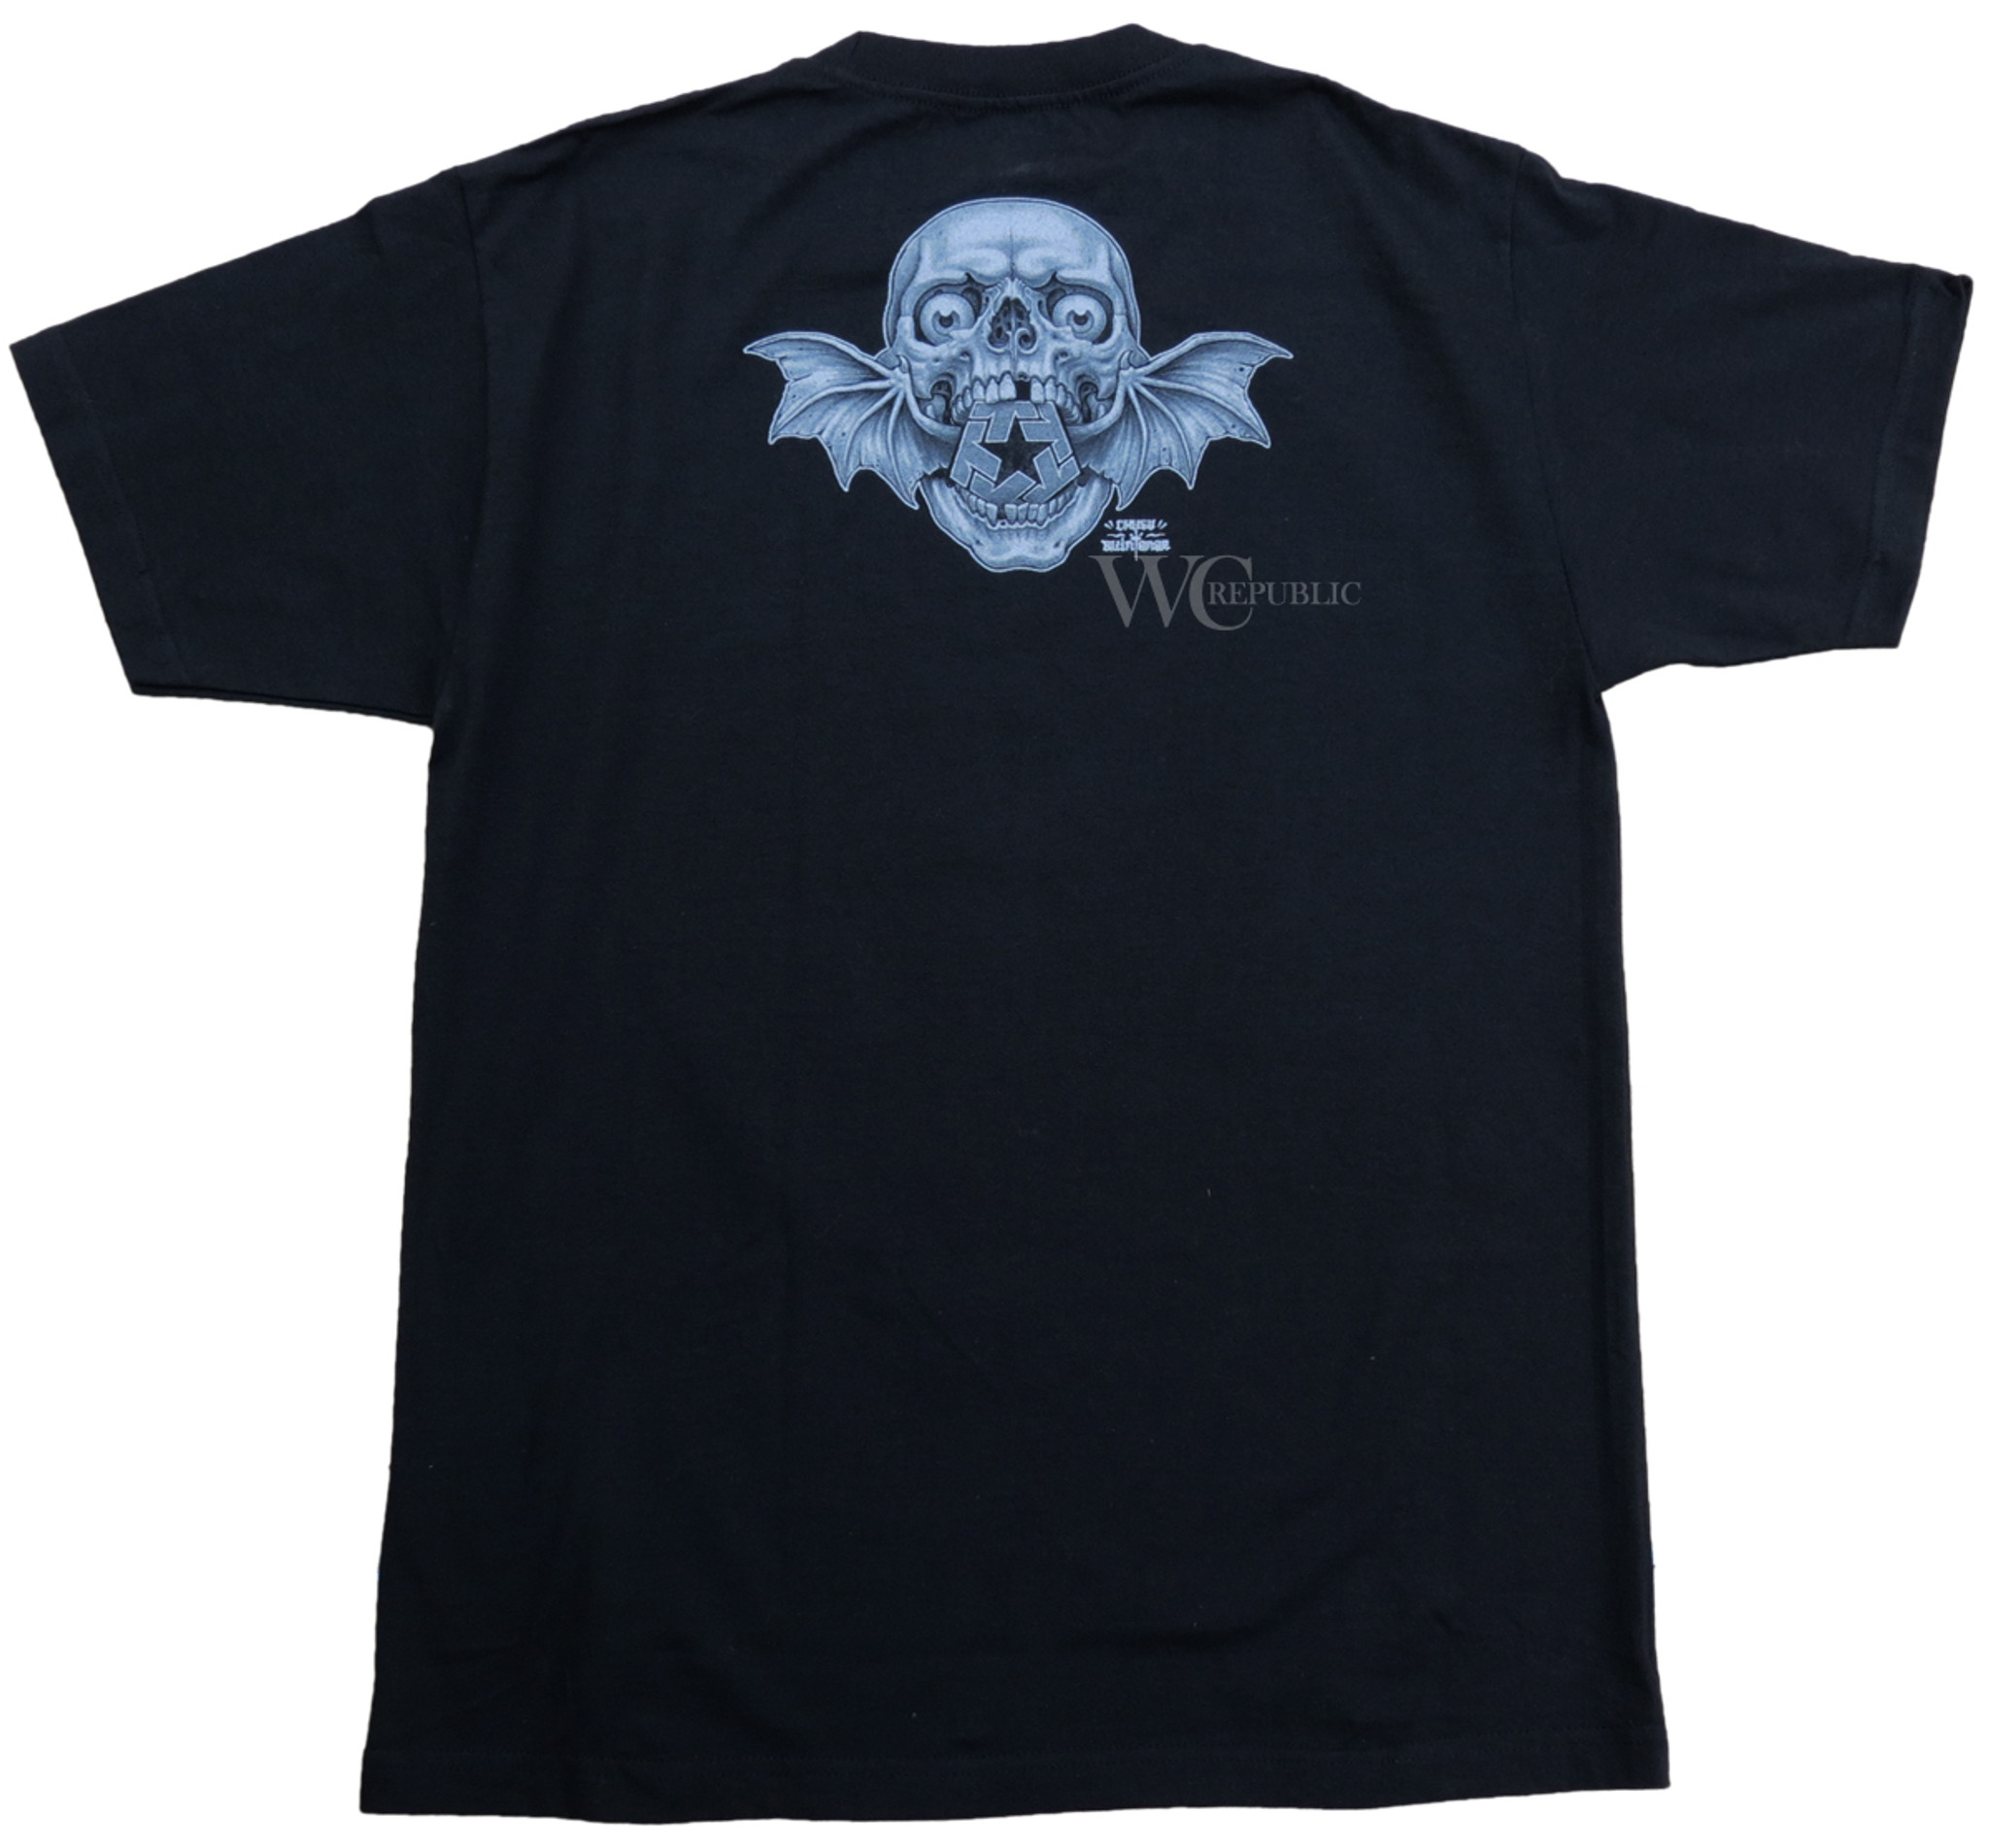 Tribal Gear Bat T-Shirt - West Coast Republic